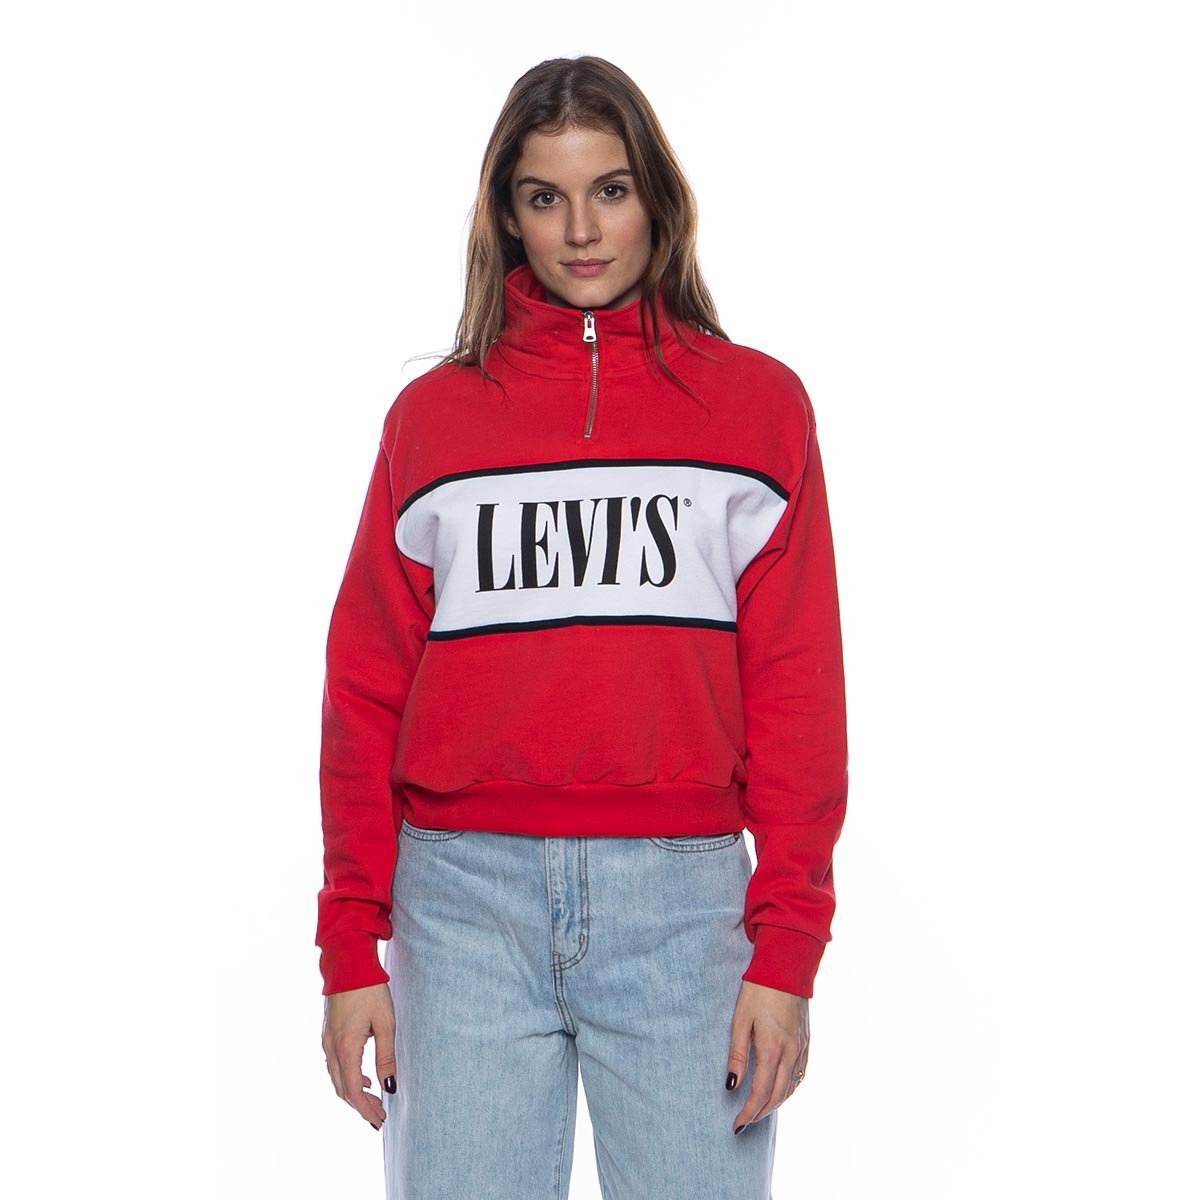 levi's red sweatshirt